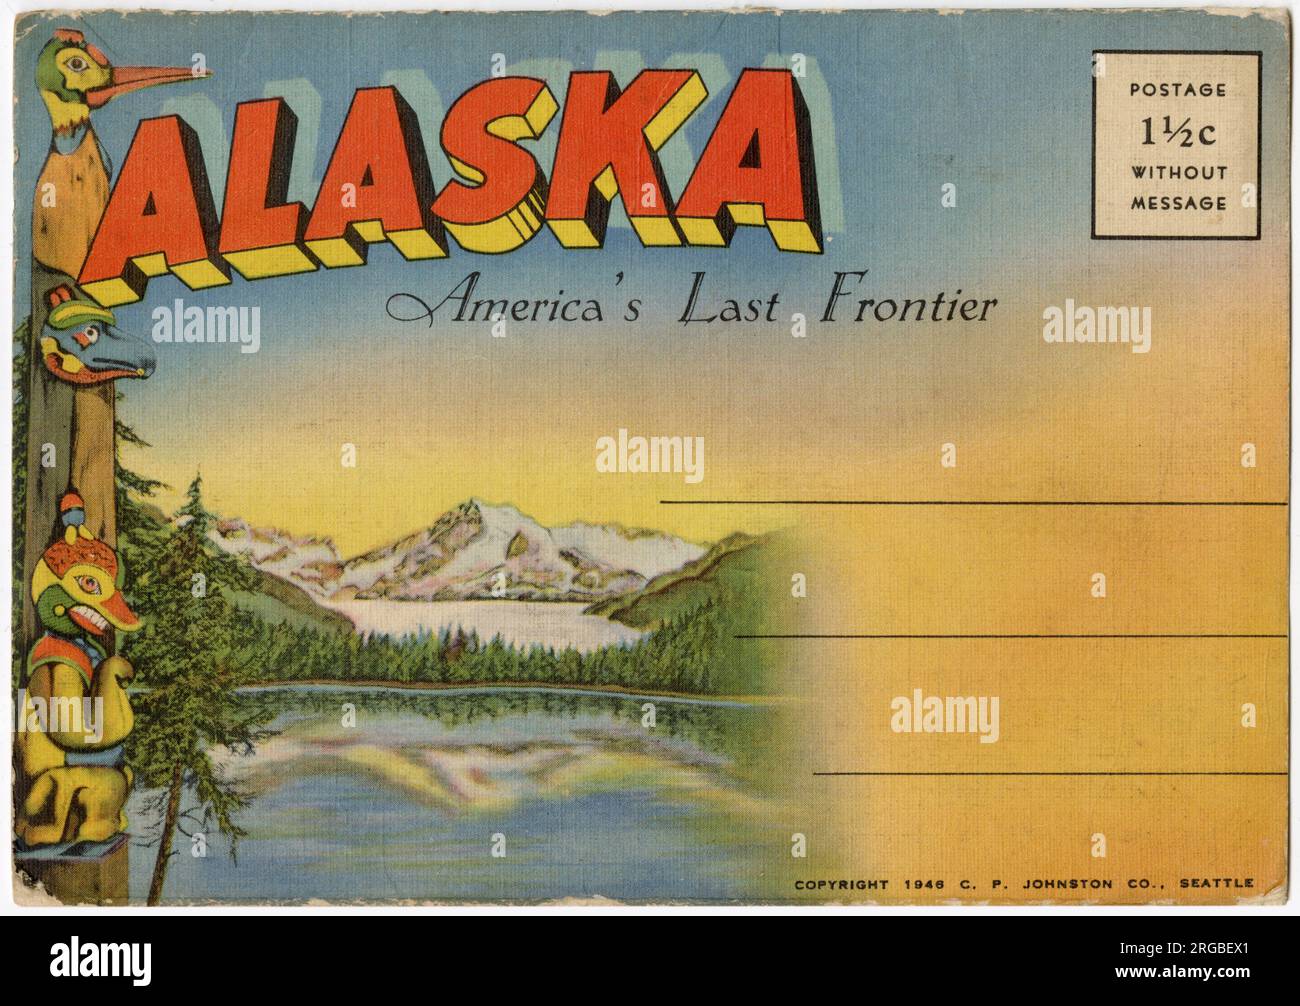 Alaska, America's Last Frontier, view of scenery Stock Photo